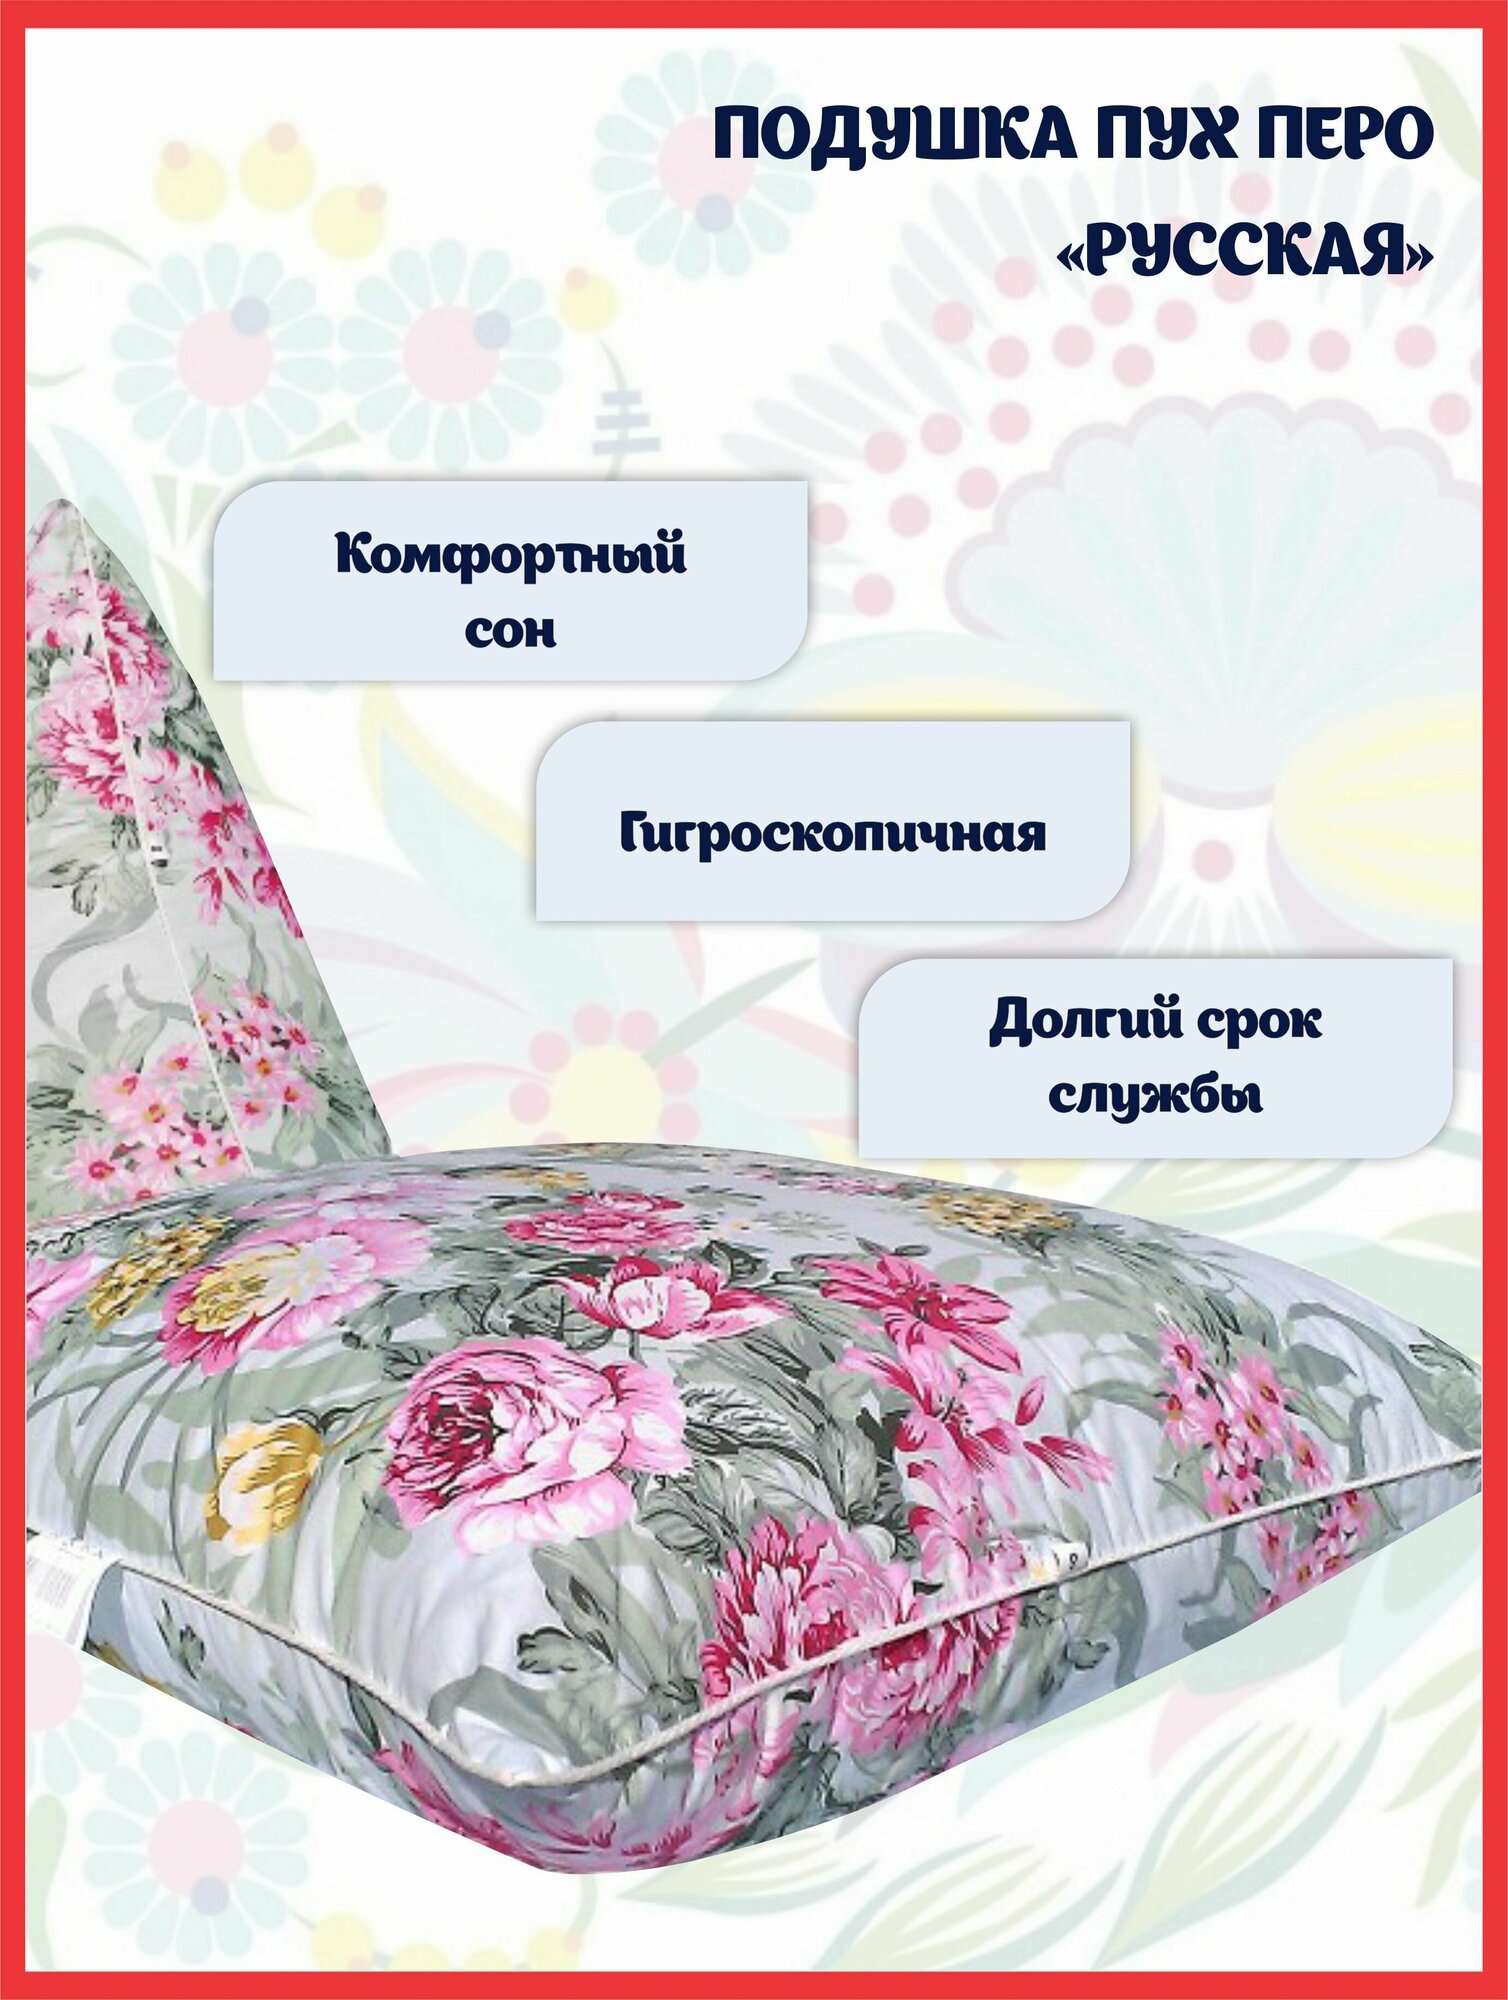 Подушка 60х60 для сна пух-перо Русская